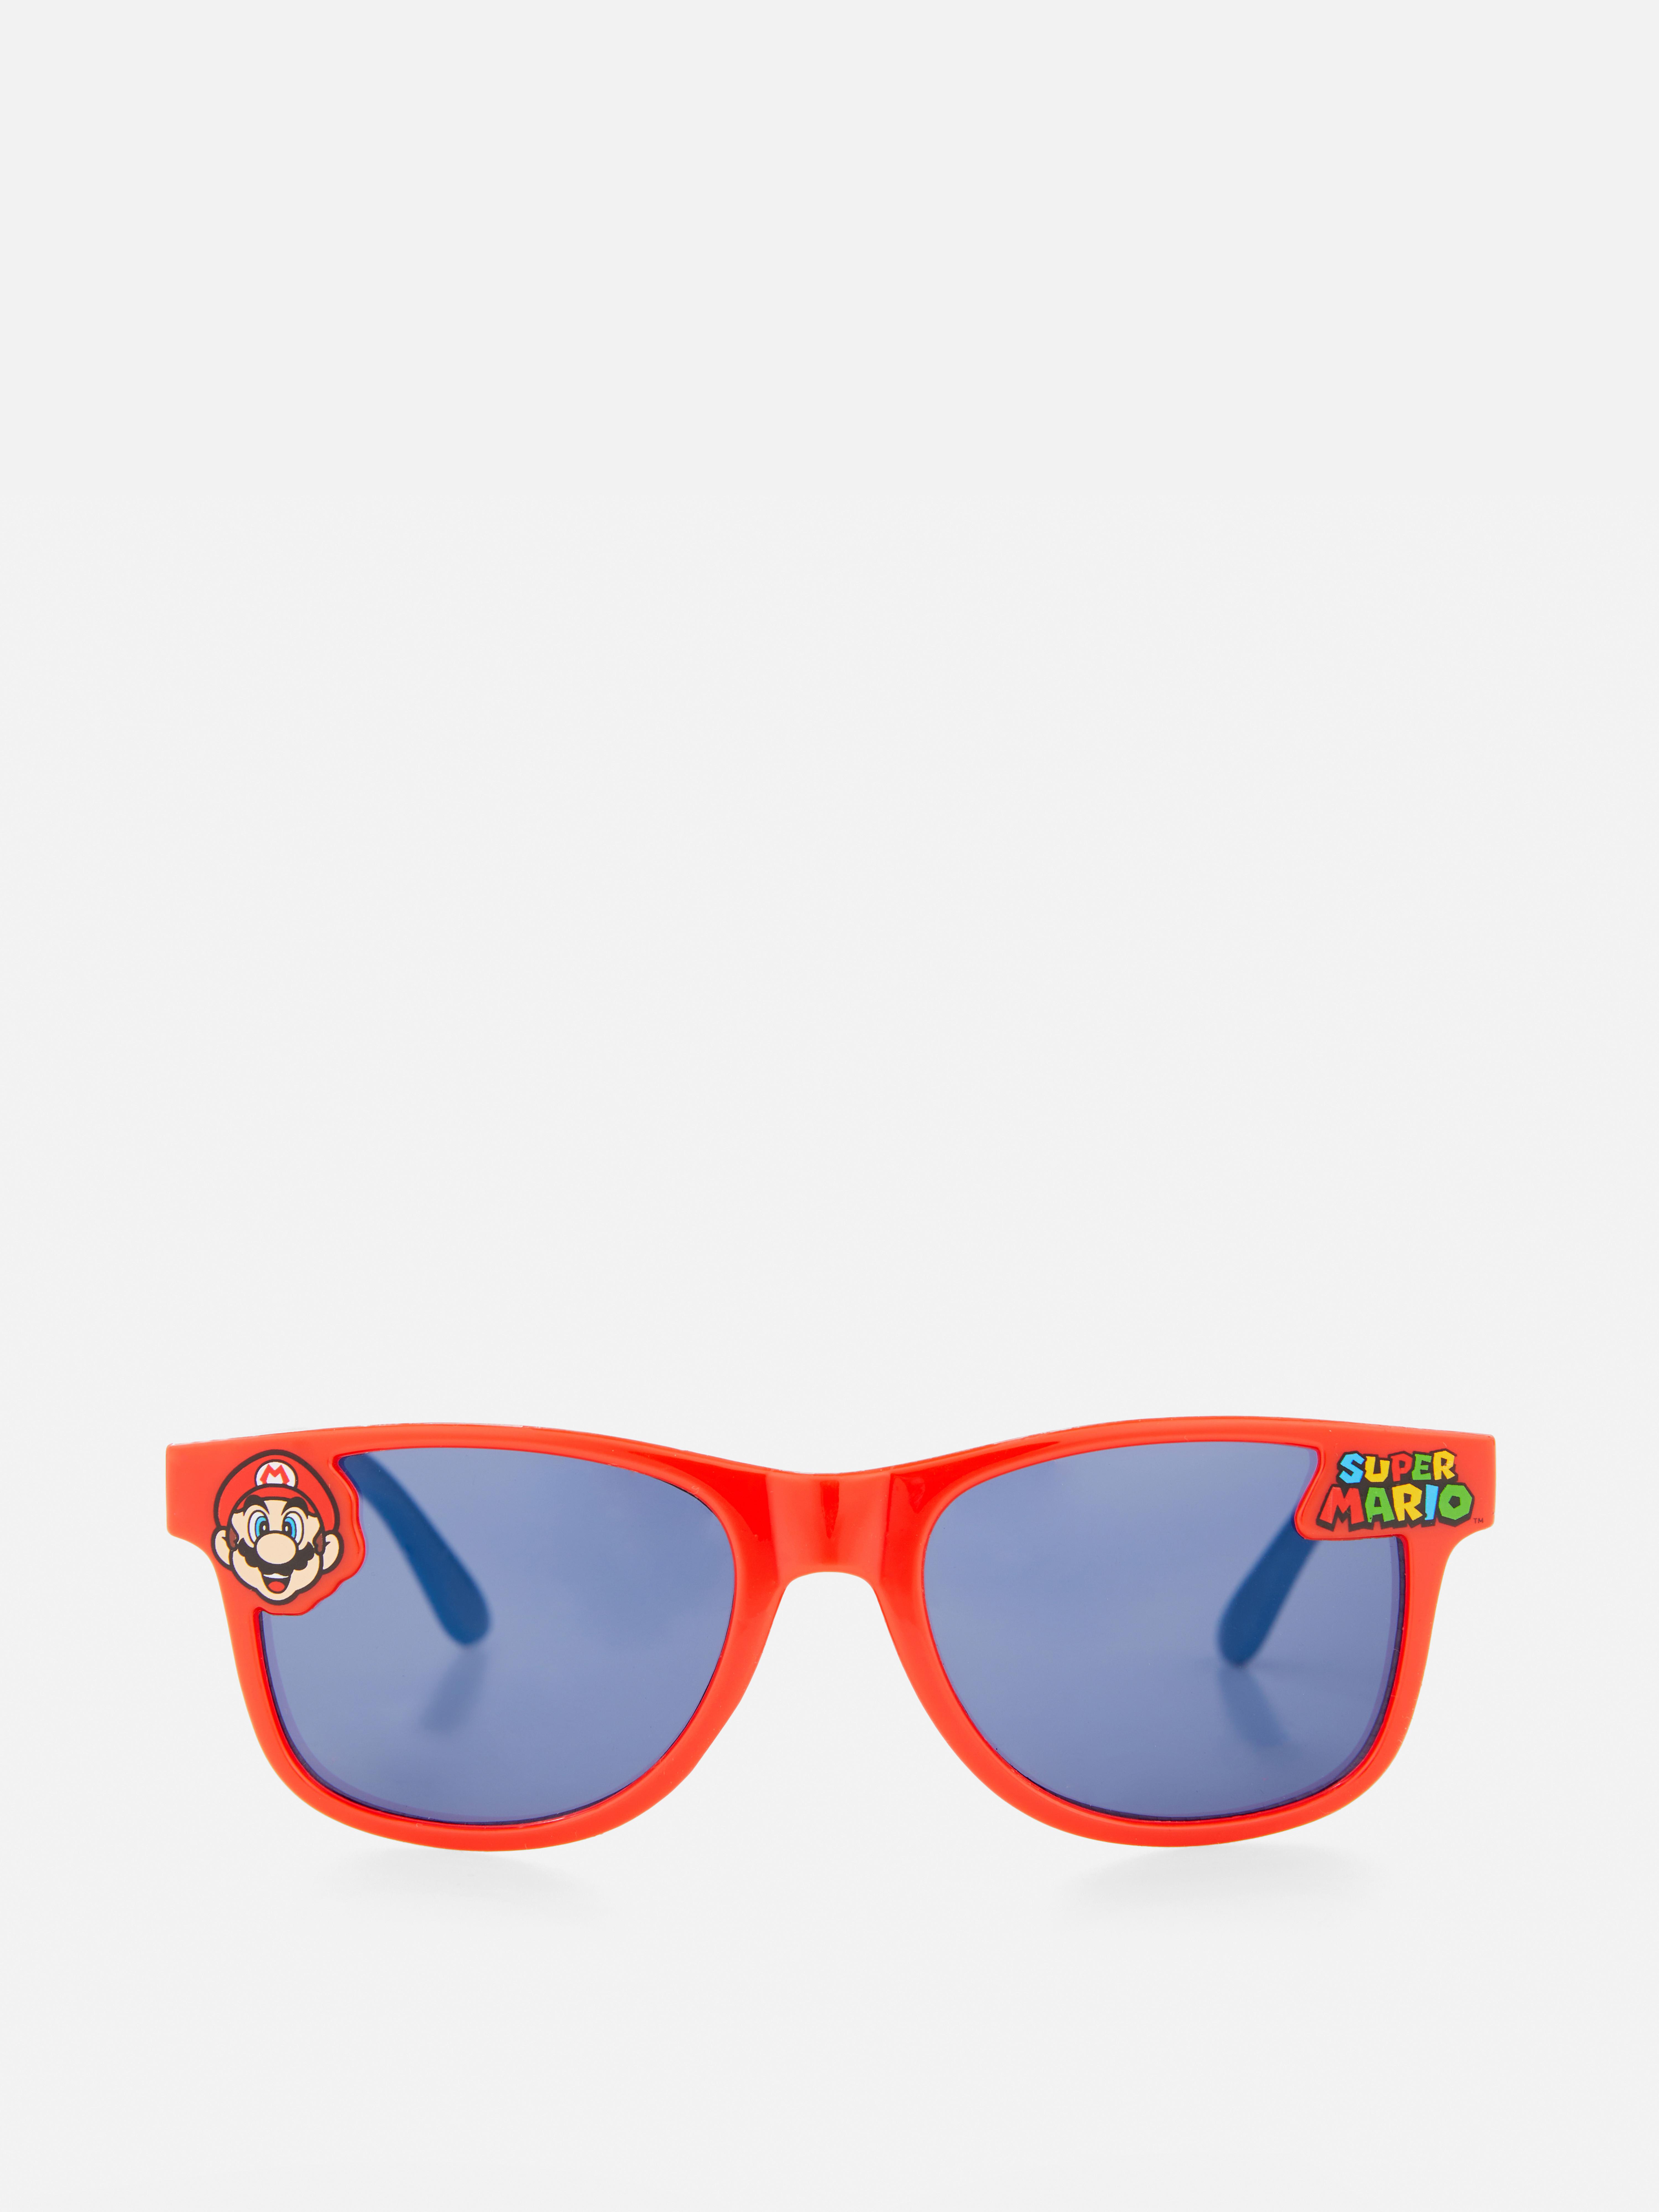 Super Mario Square Rimmed Sunglasses